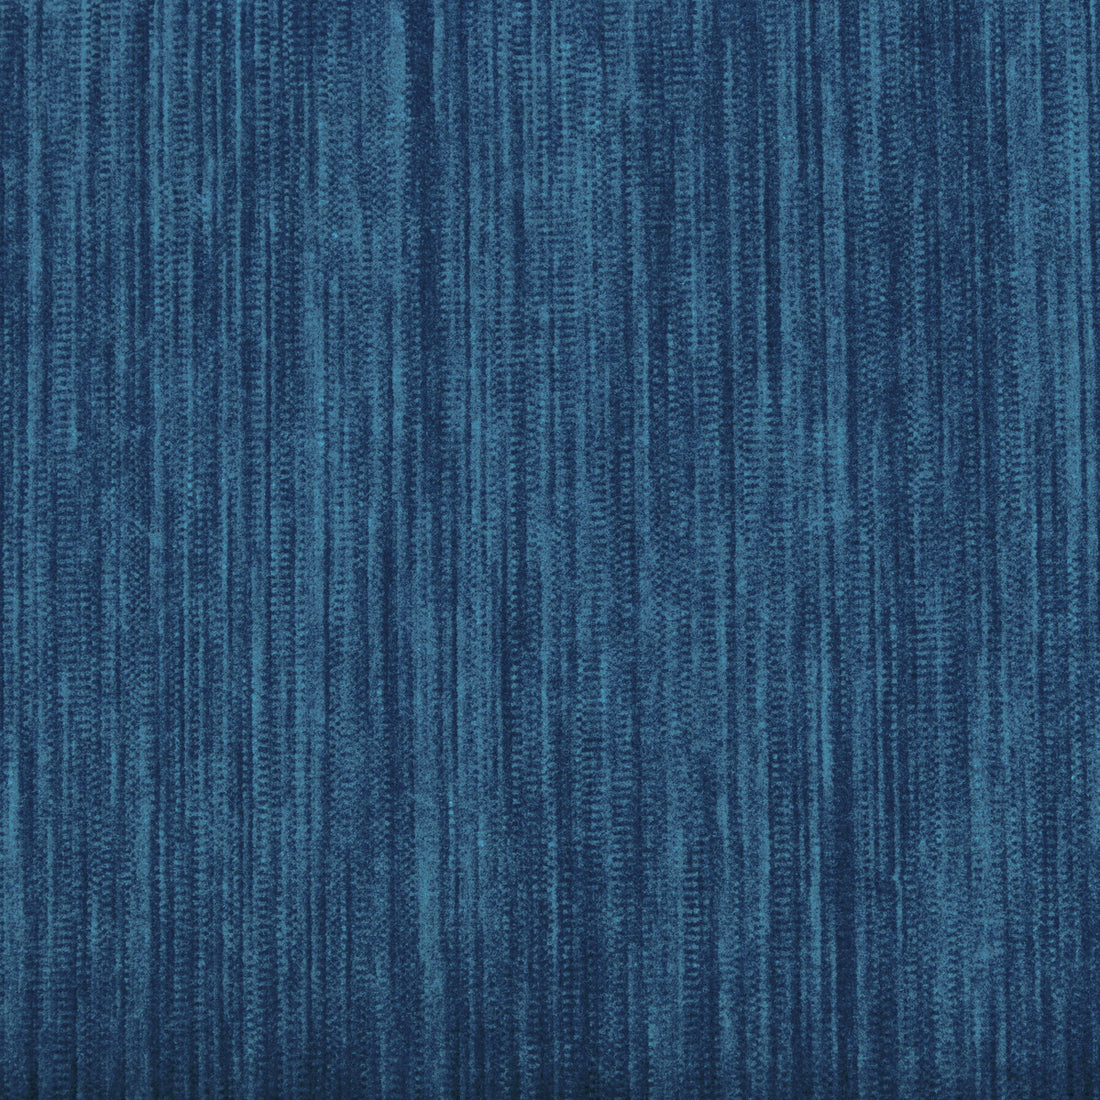 Barnwell Velvet fabric in delft color - pattern 2020180.515.0 - by Lee Jofa in the Barnwell Velvet collection